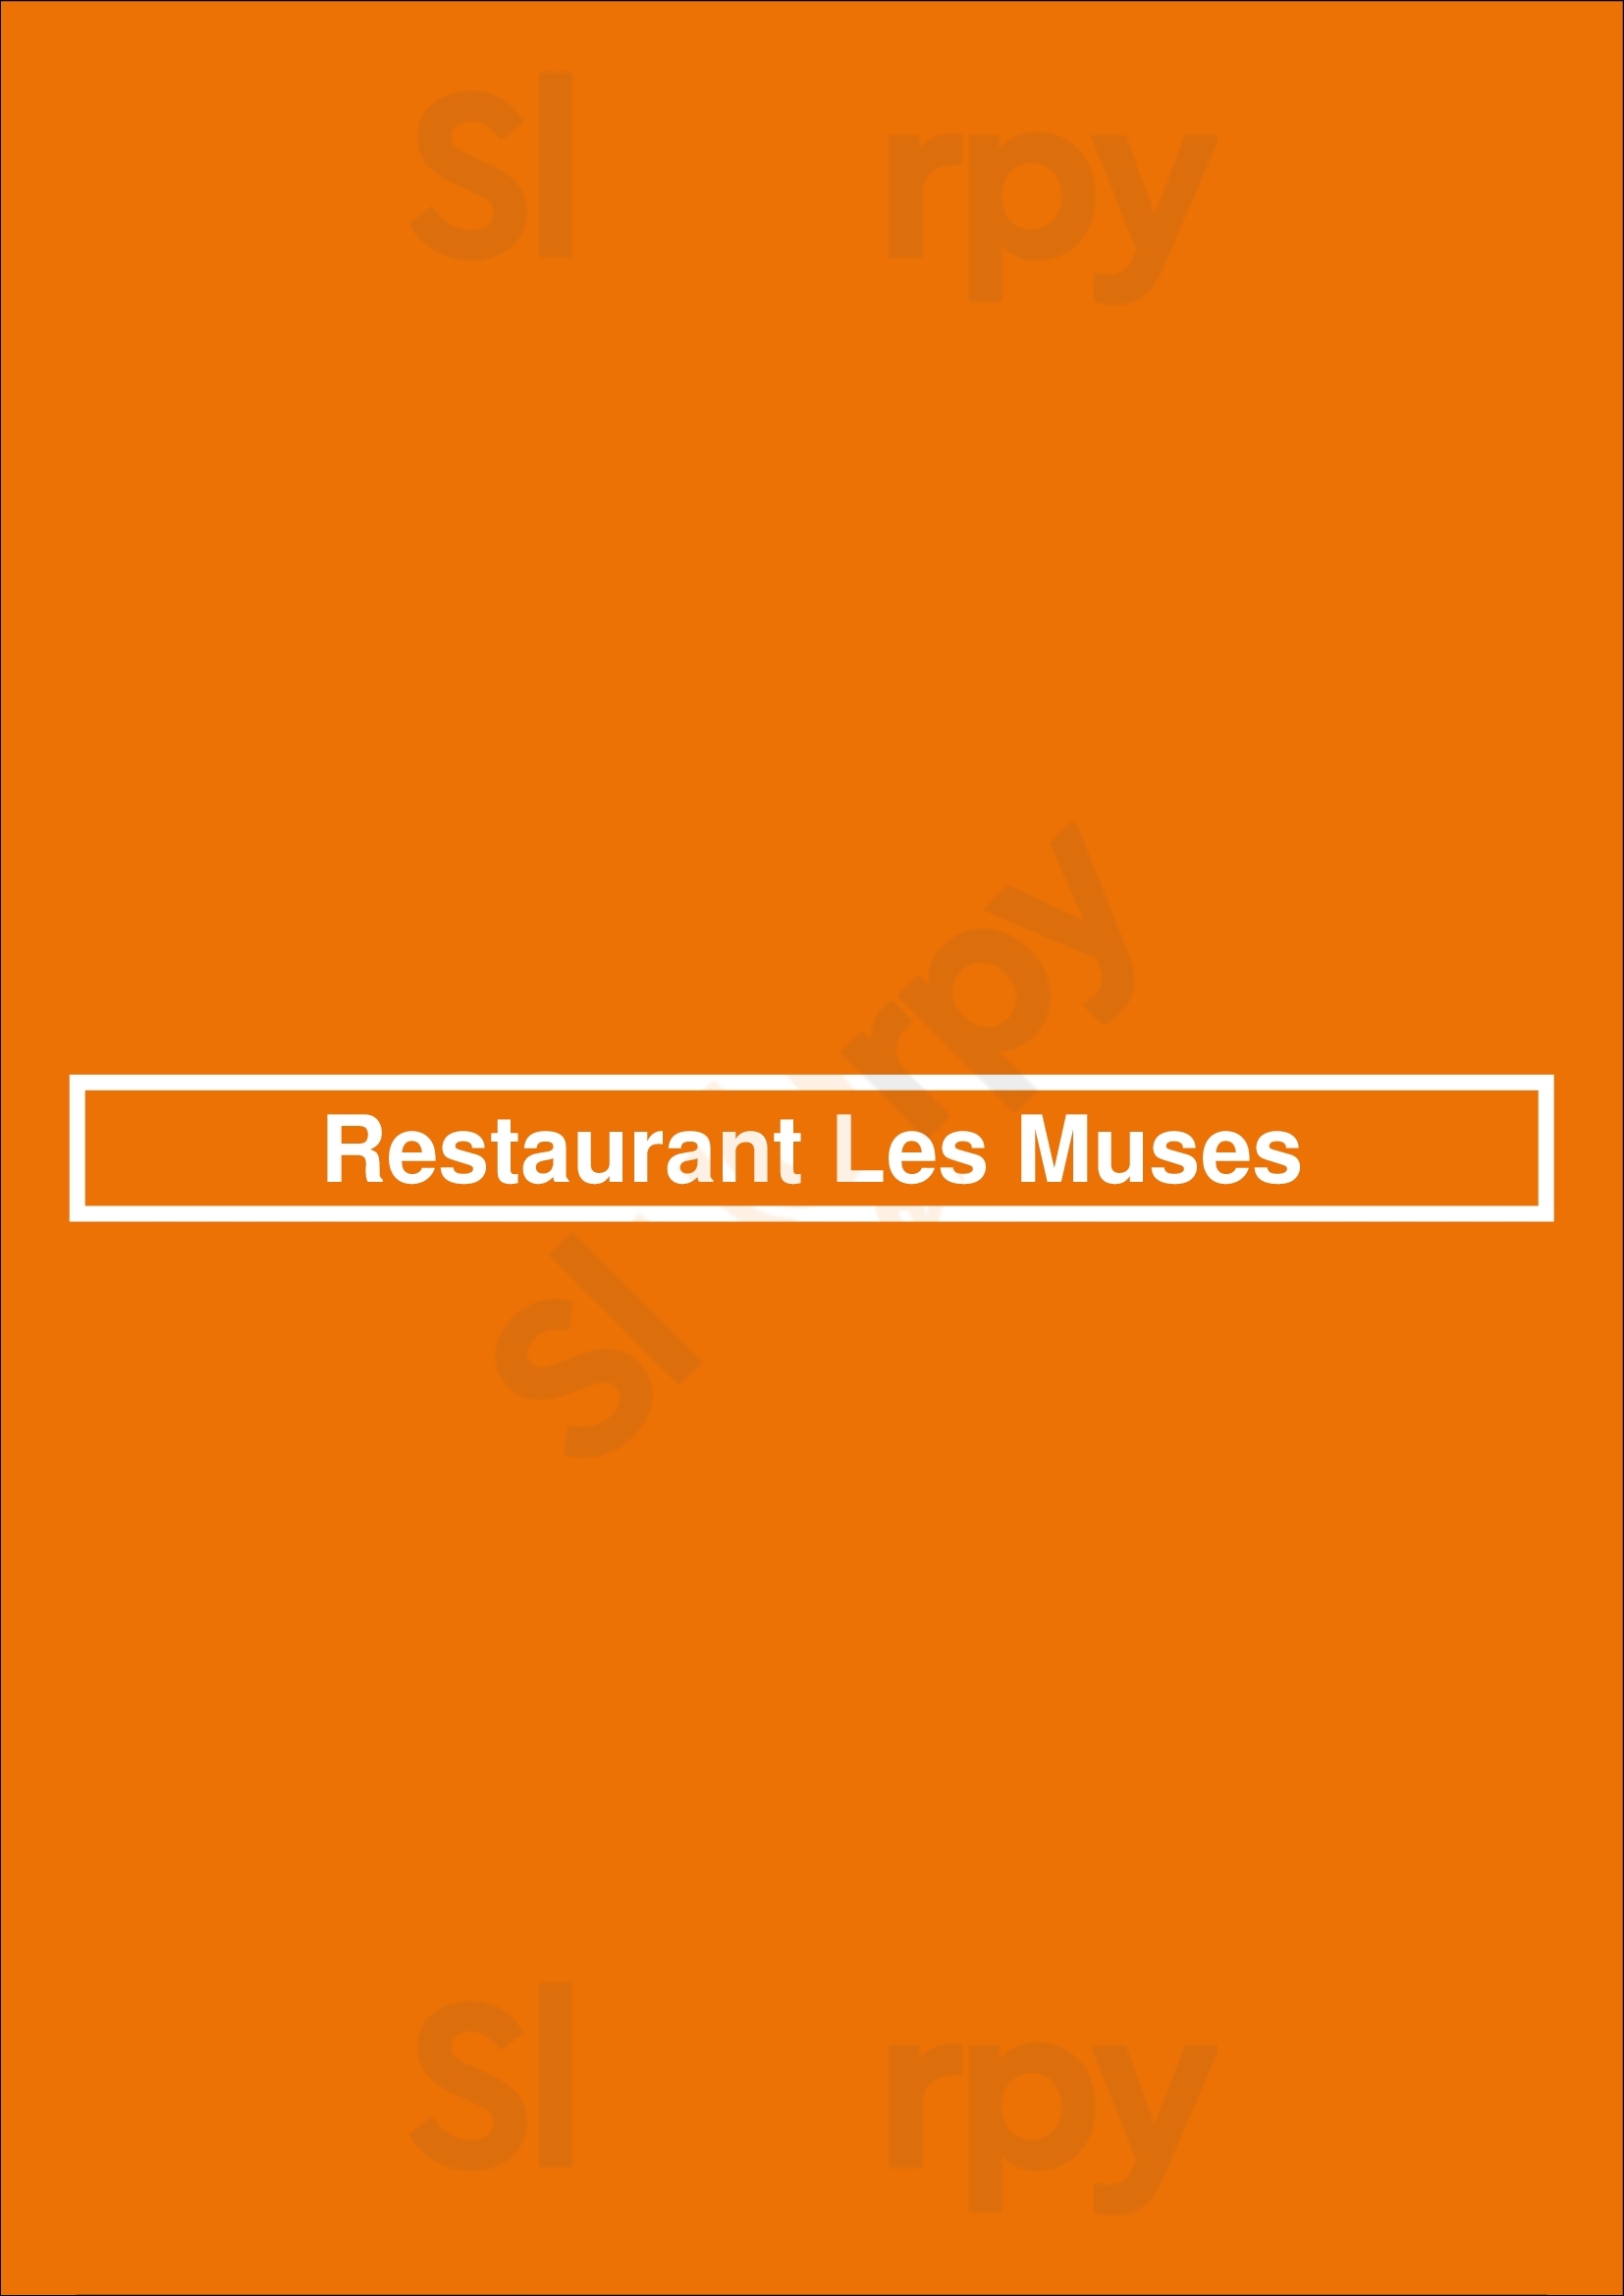 Restaurant Les Muses Nanterre Menu - 1